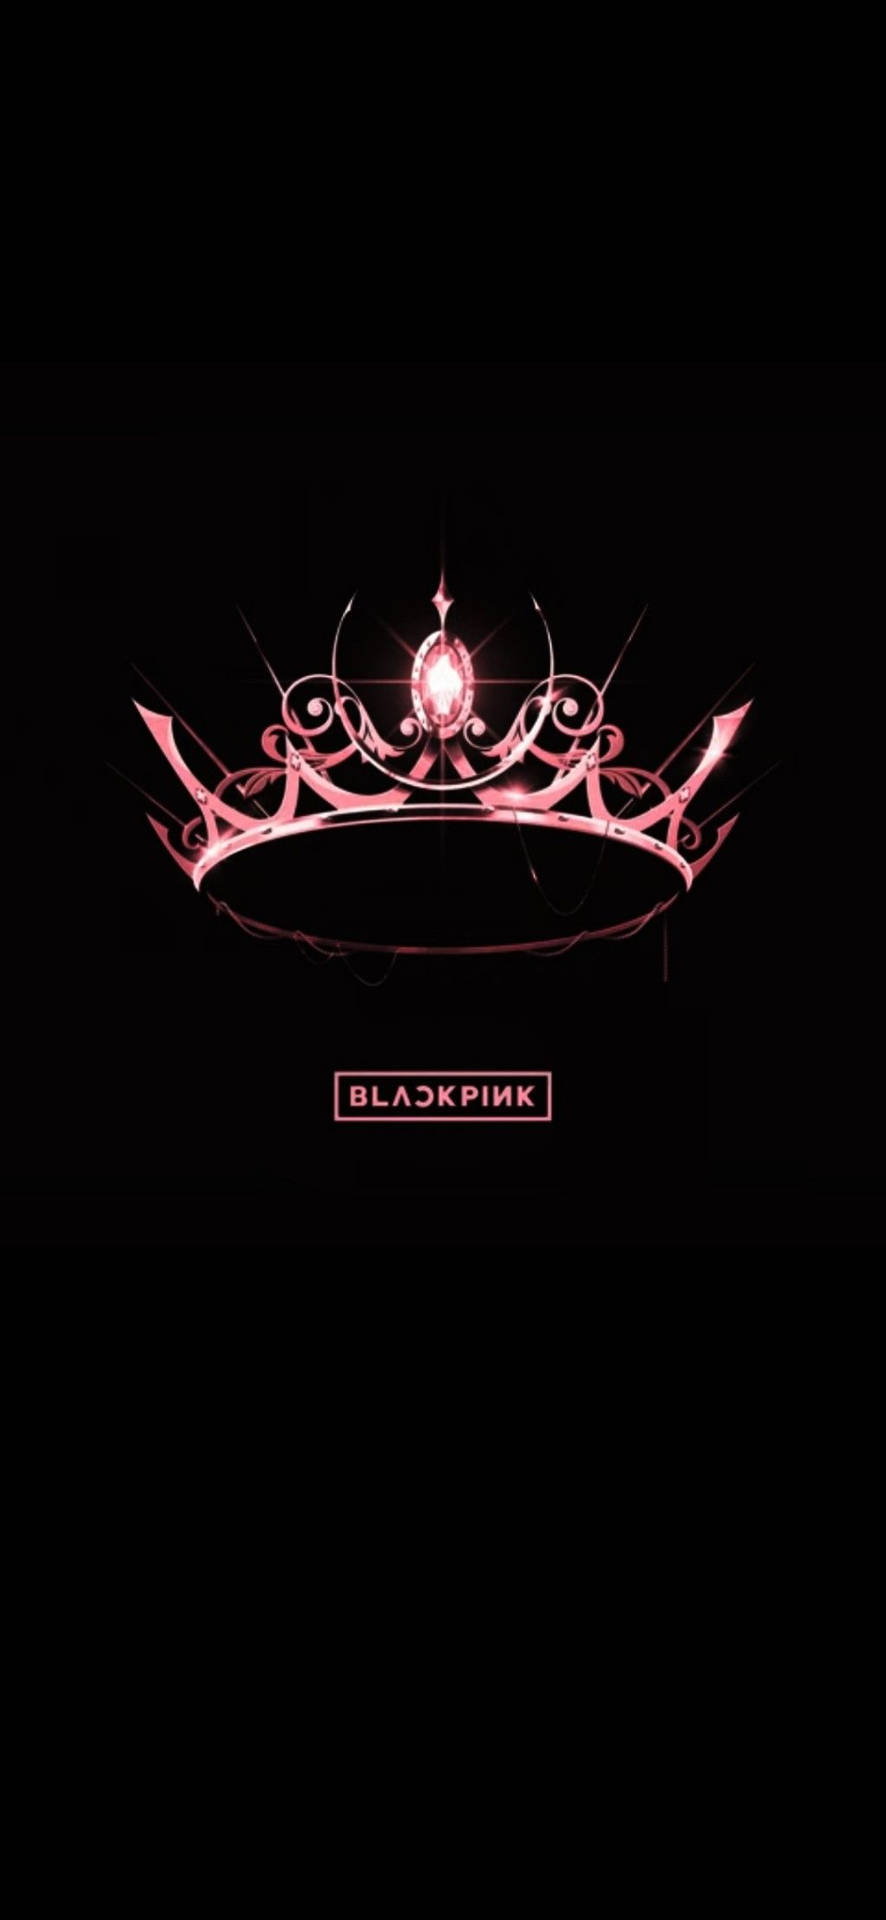 Blackpink Logo For The Album 2020